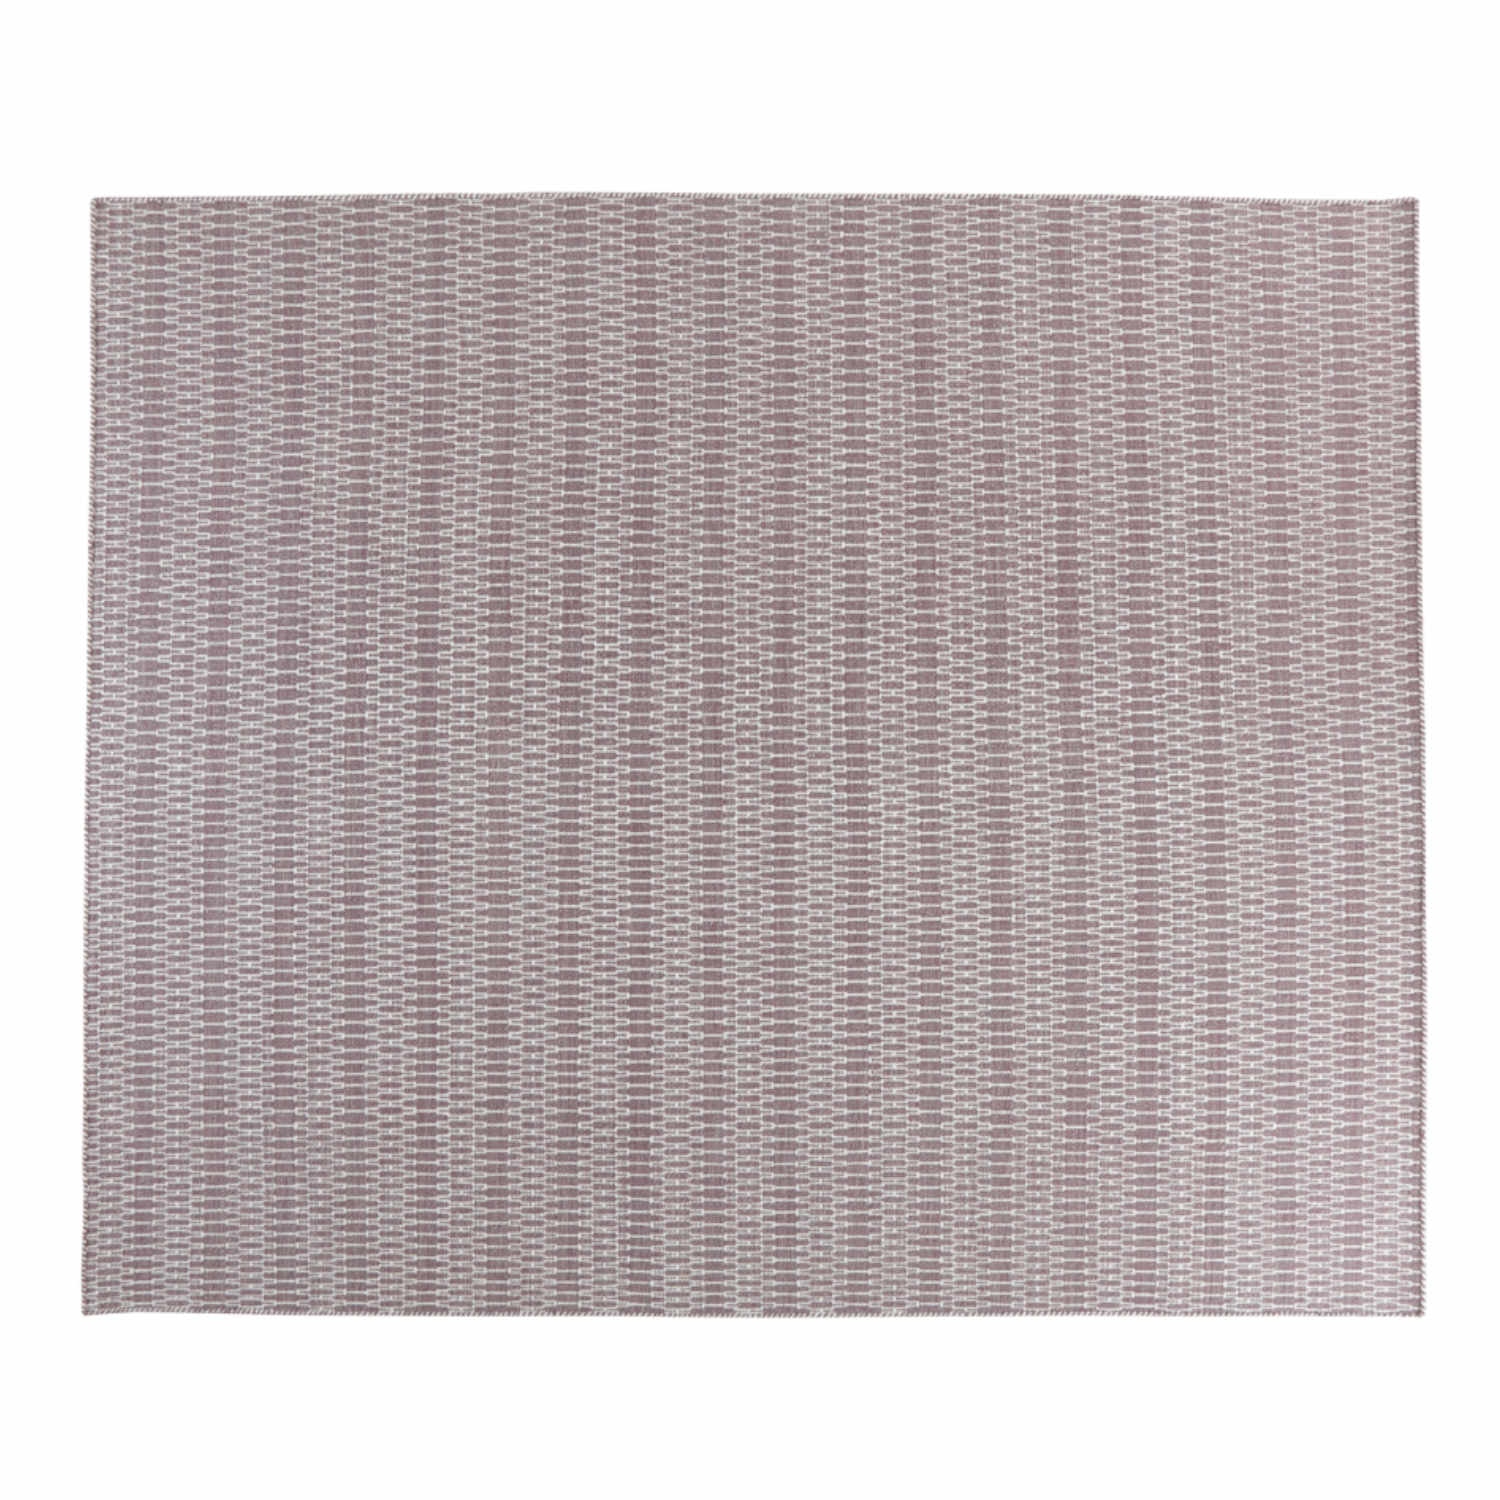 VanGard Vol. II Teppich, Grösse 300 x 400 cm, Farbe grape shake von miinu